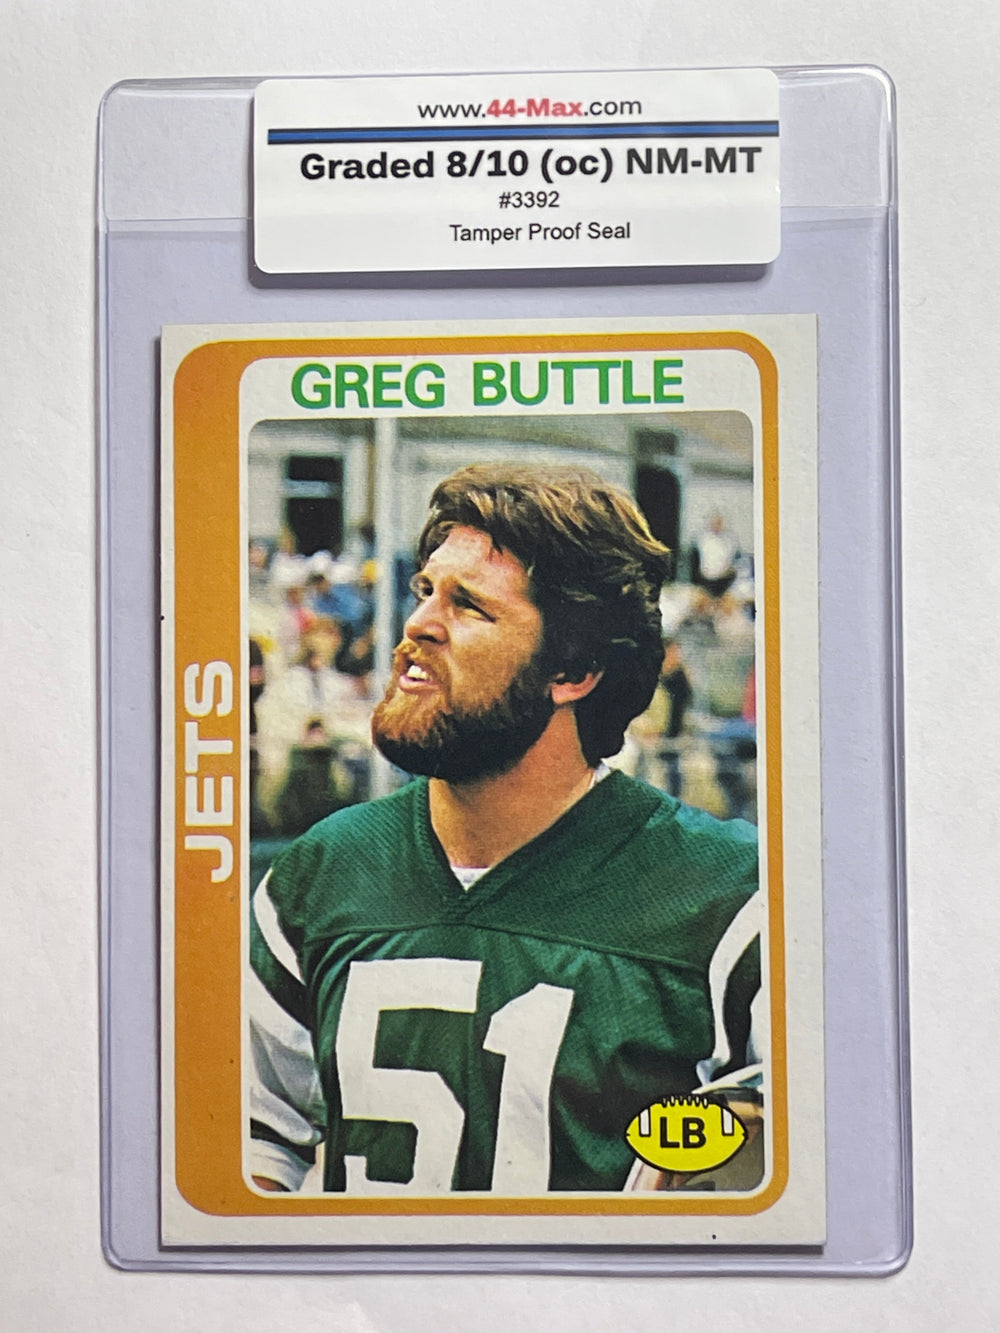 Greg Buttle 1978 Topps Football Card. 44-Max 8/10 (oc) NM-MT #3392